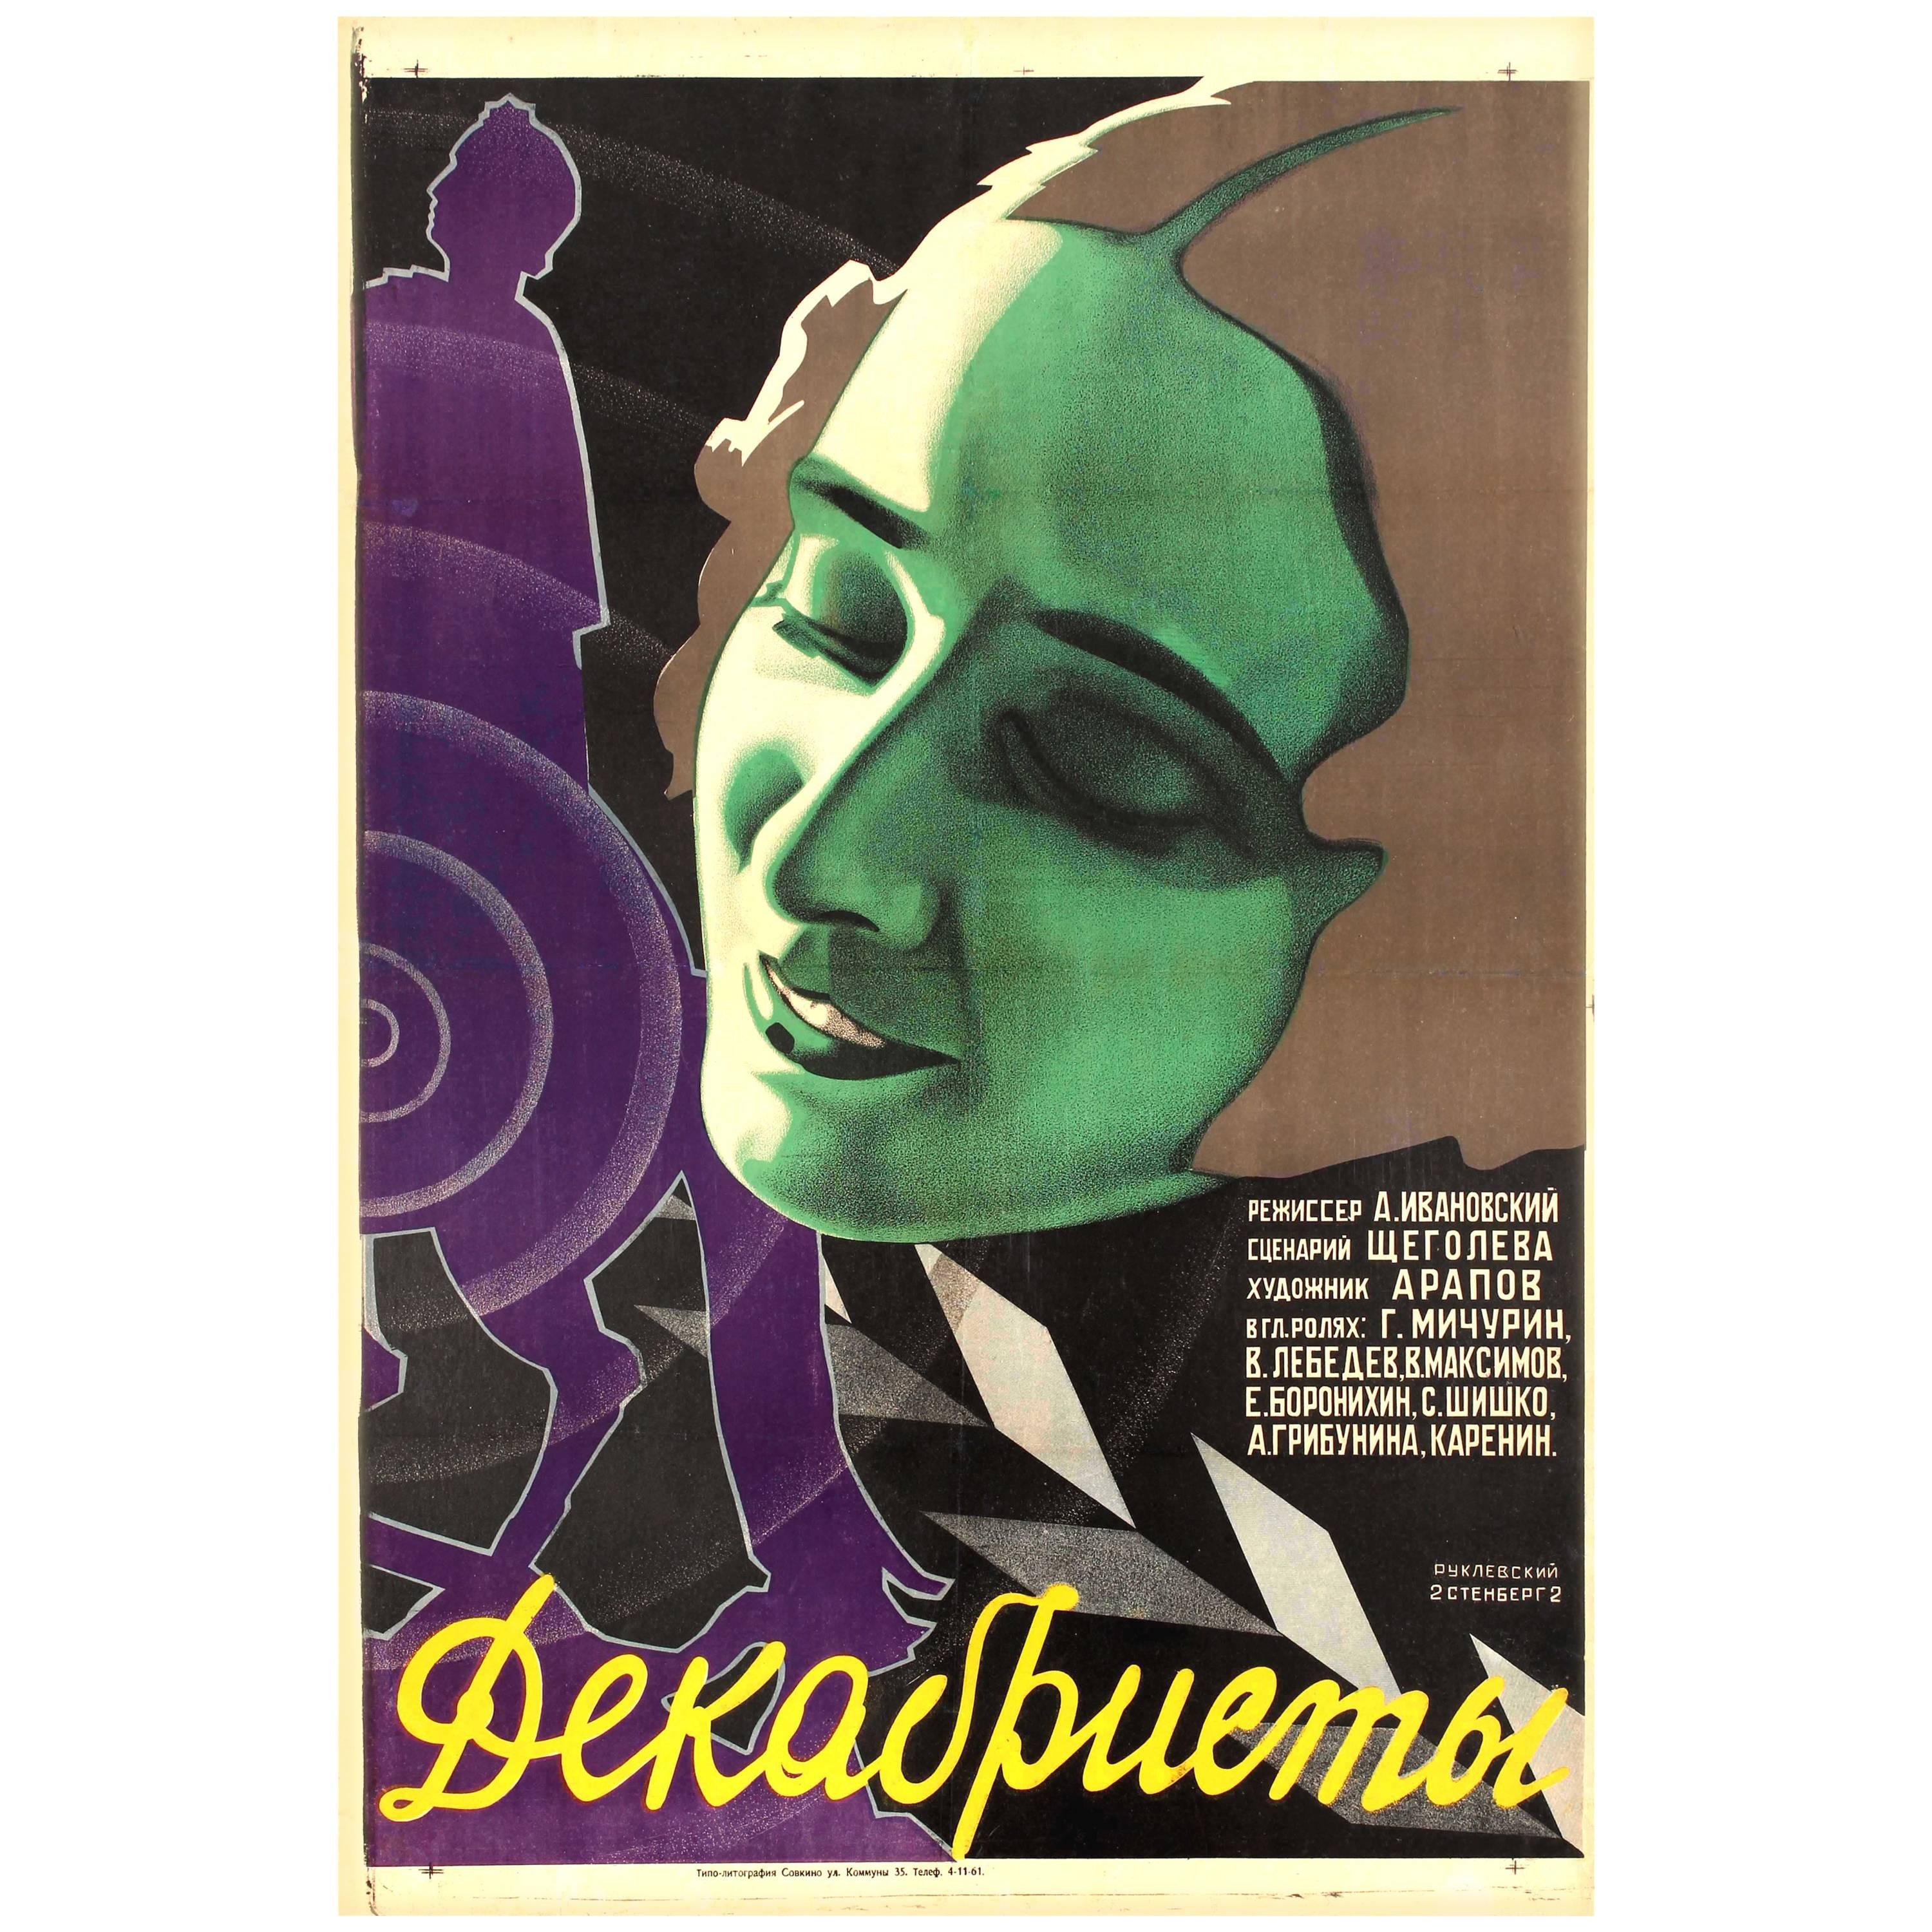 Original Vintage 1927 Constructivist Design Soviet Film Poster for Decembrists